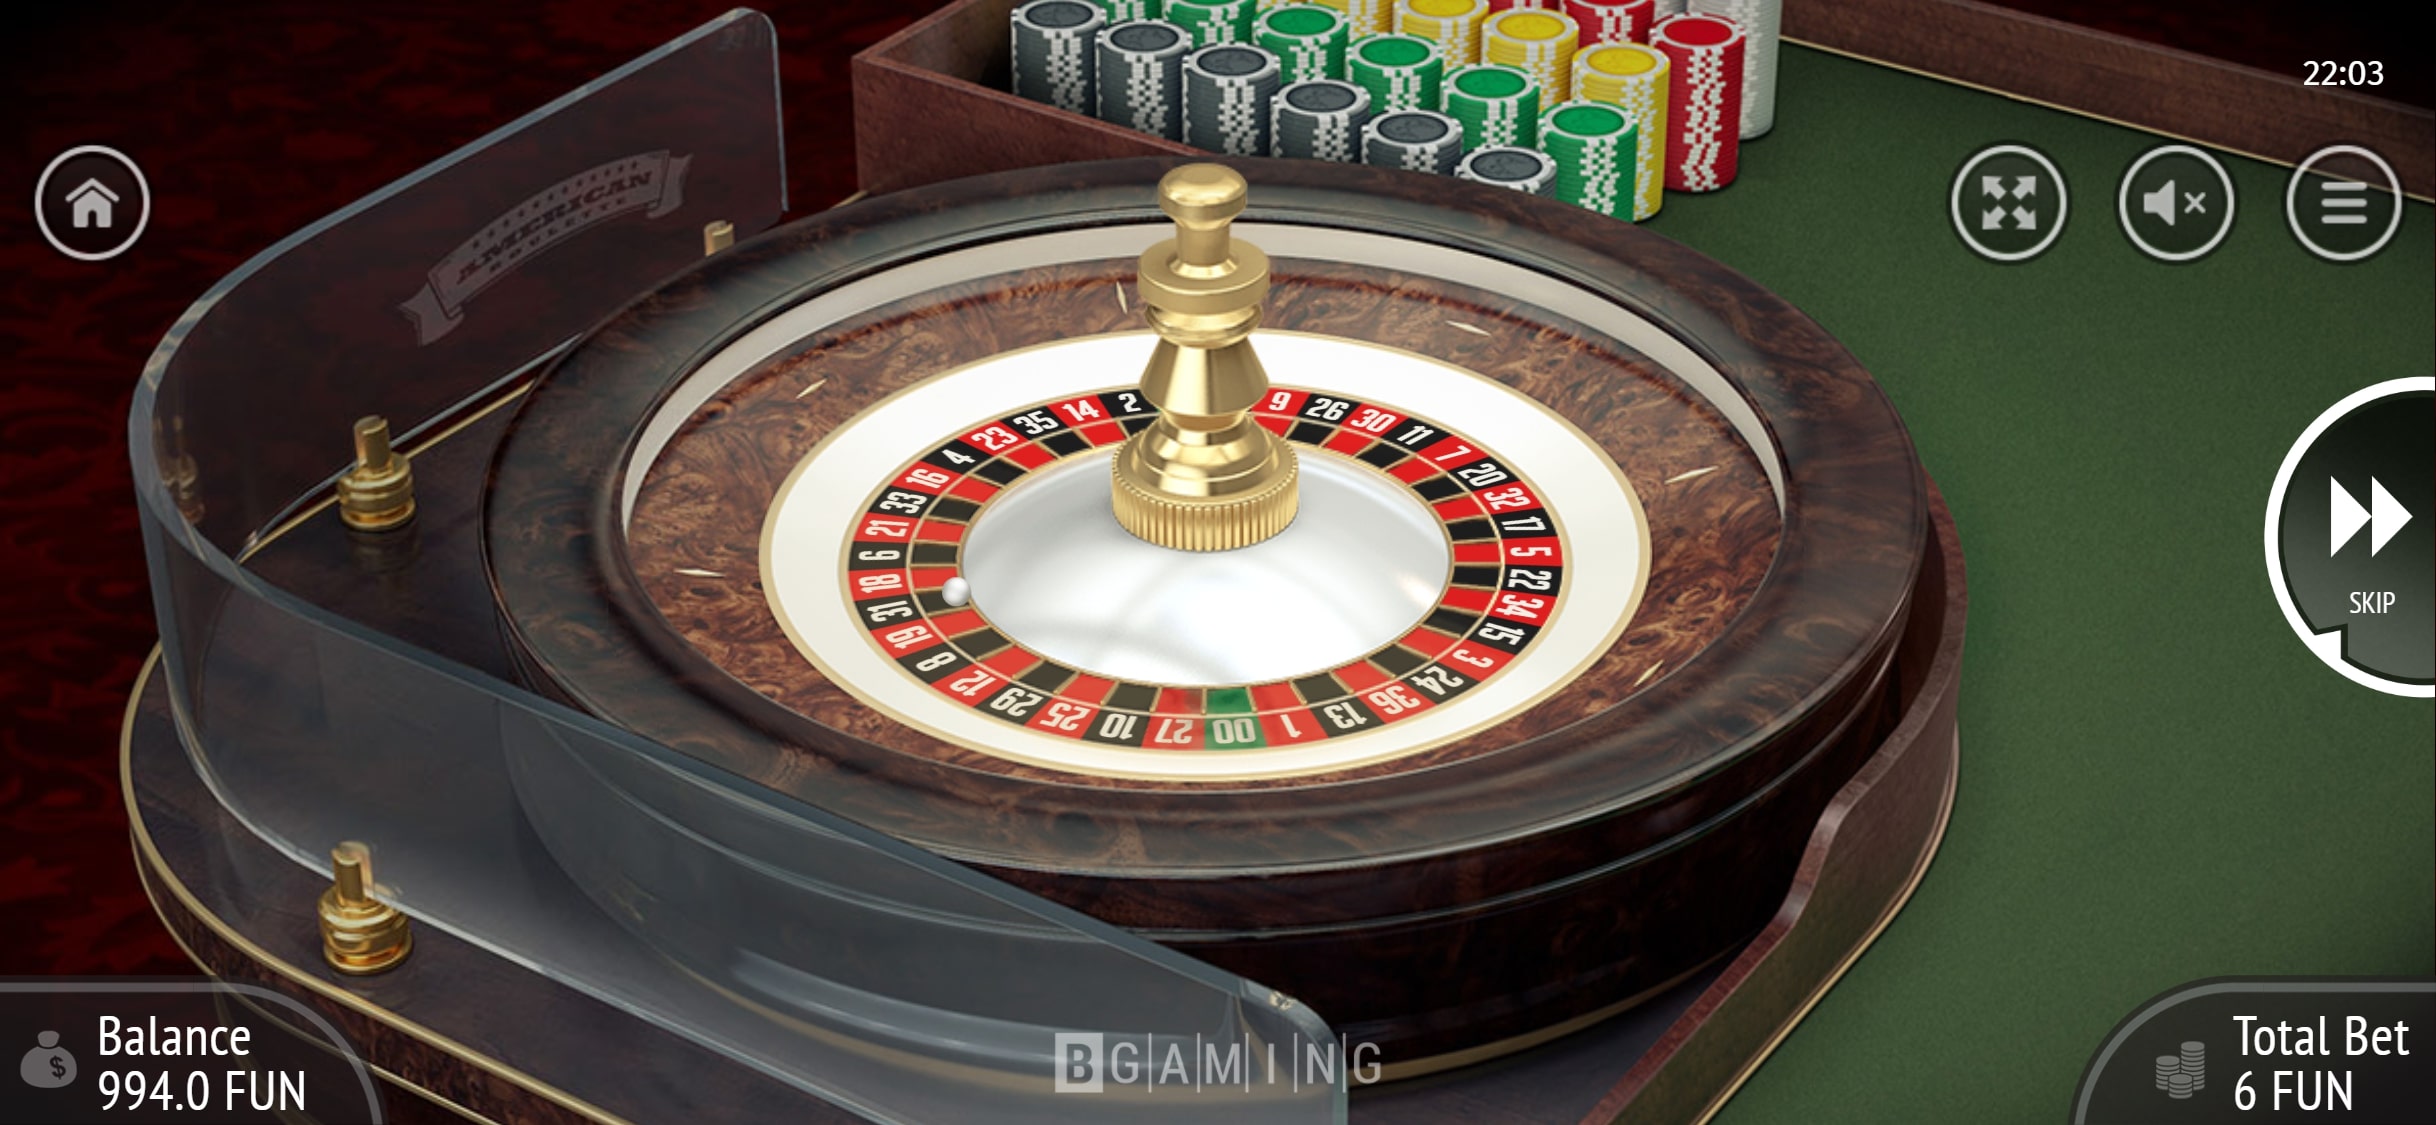 Casino Superlines Mobile Casino Games Review